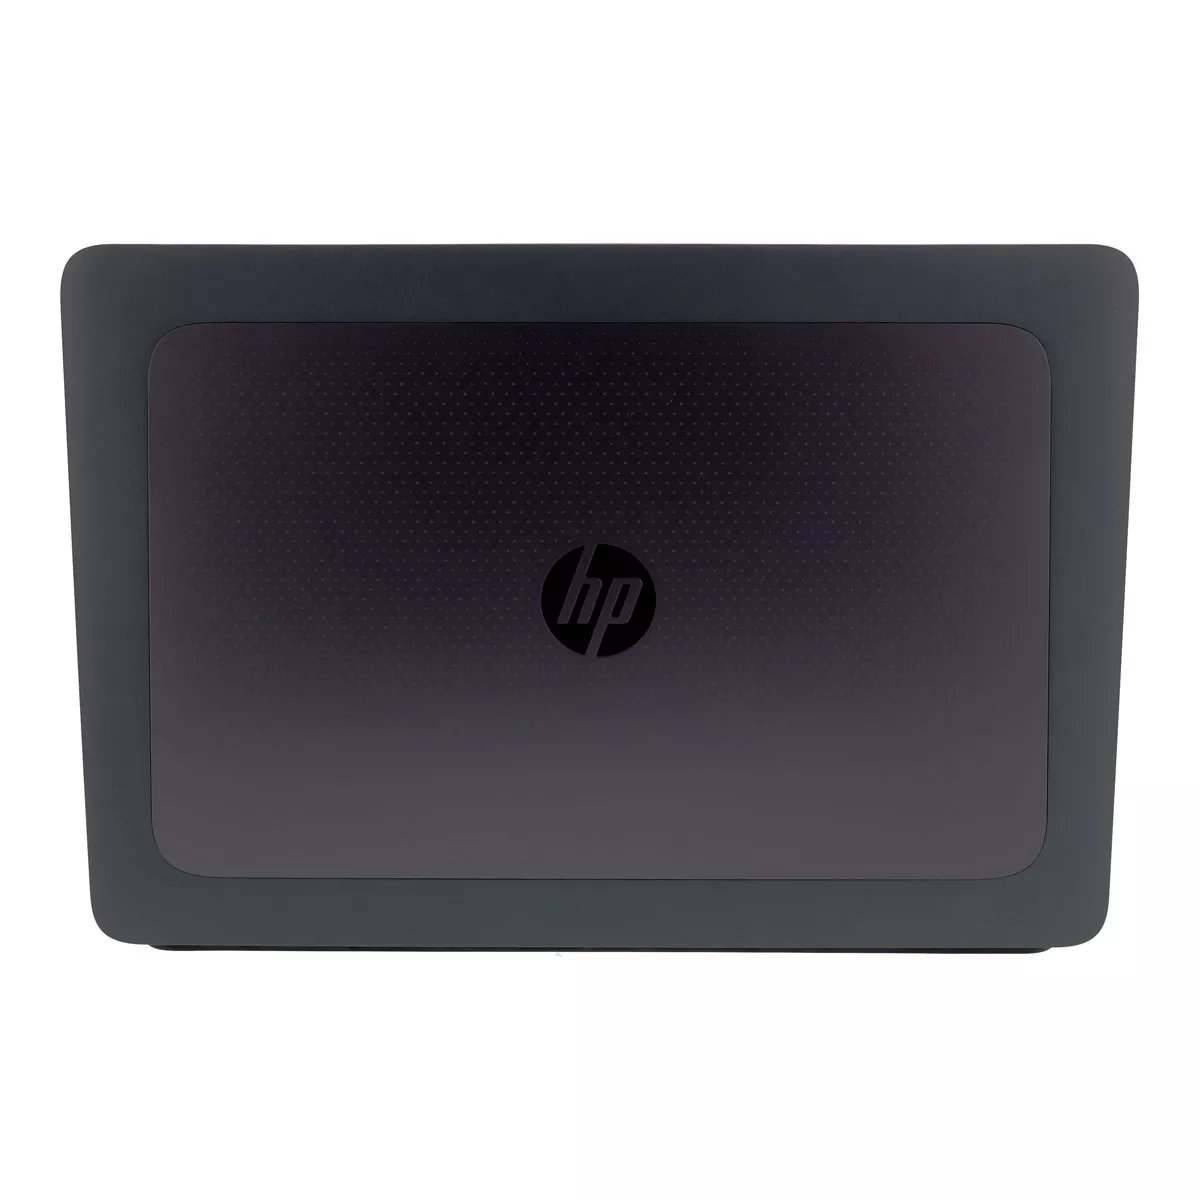 HP ZBook 15 G3 Core i7 6820HQ nVidia Quadro M2000M Full-HD 16 GB DDR4 512 GB M.2 SSD Webcam A+